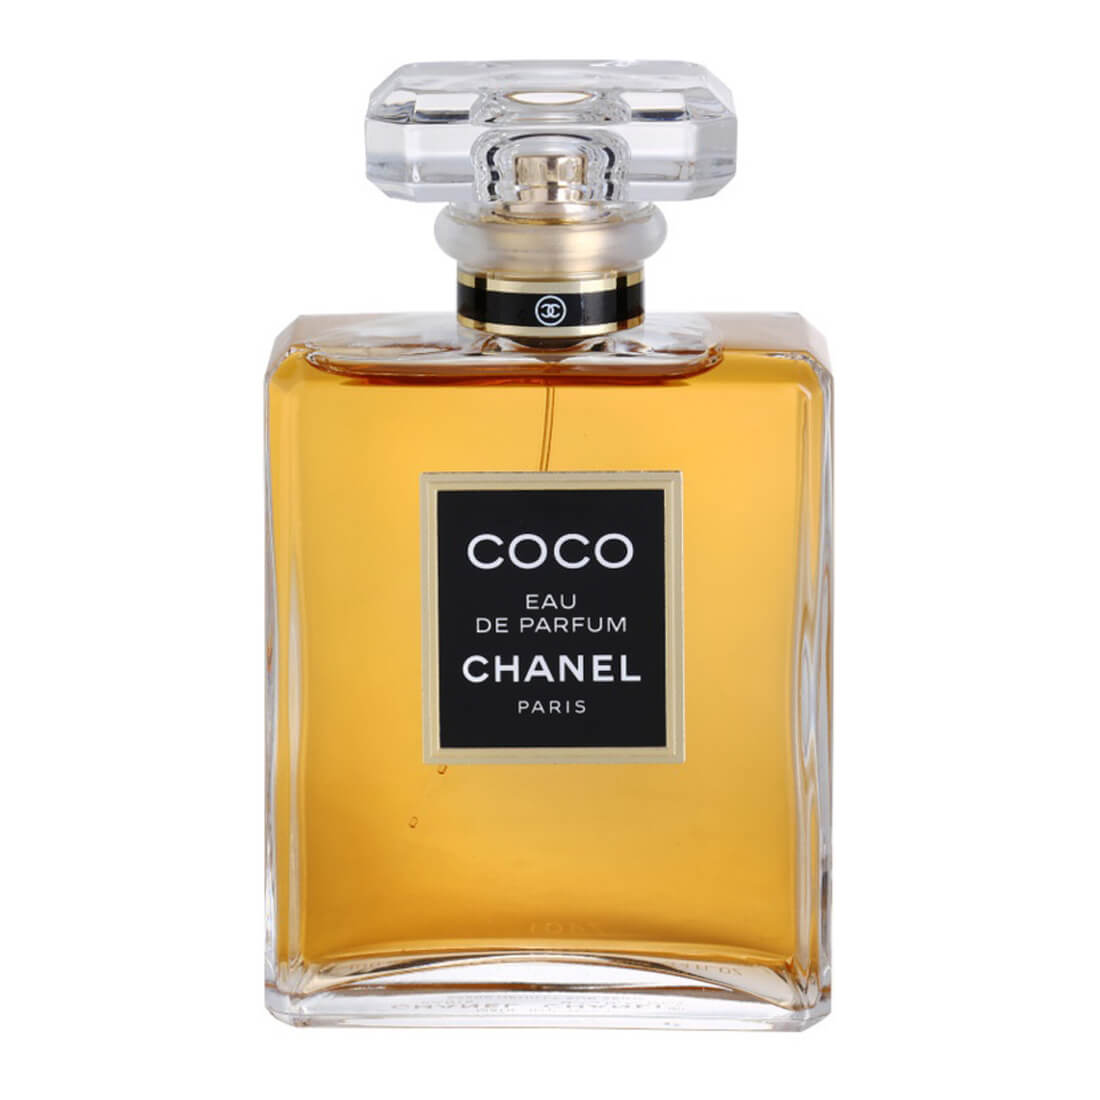 Coco by Chanel Eau de Toilette Spray 3.4 oz (women)